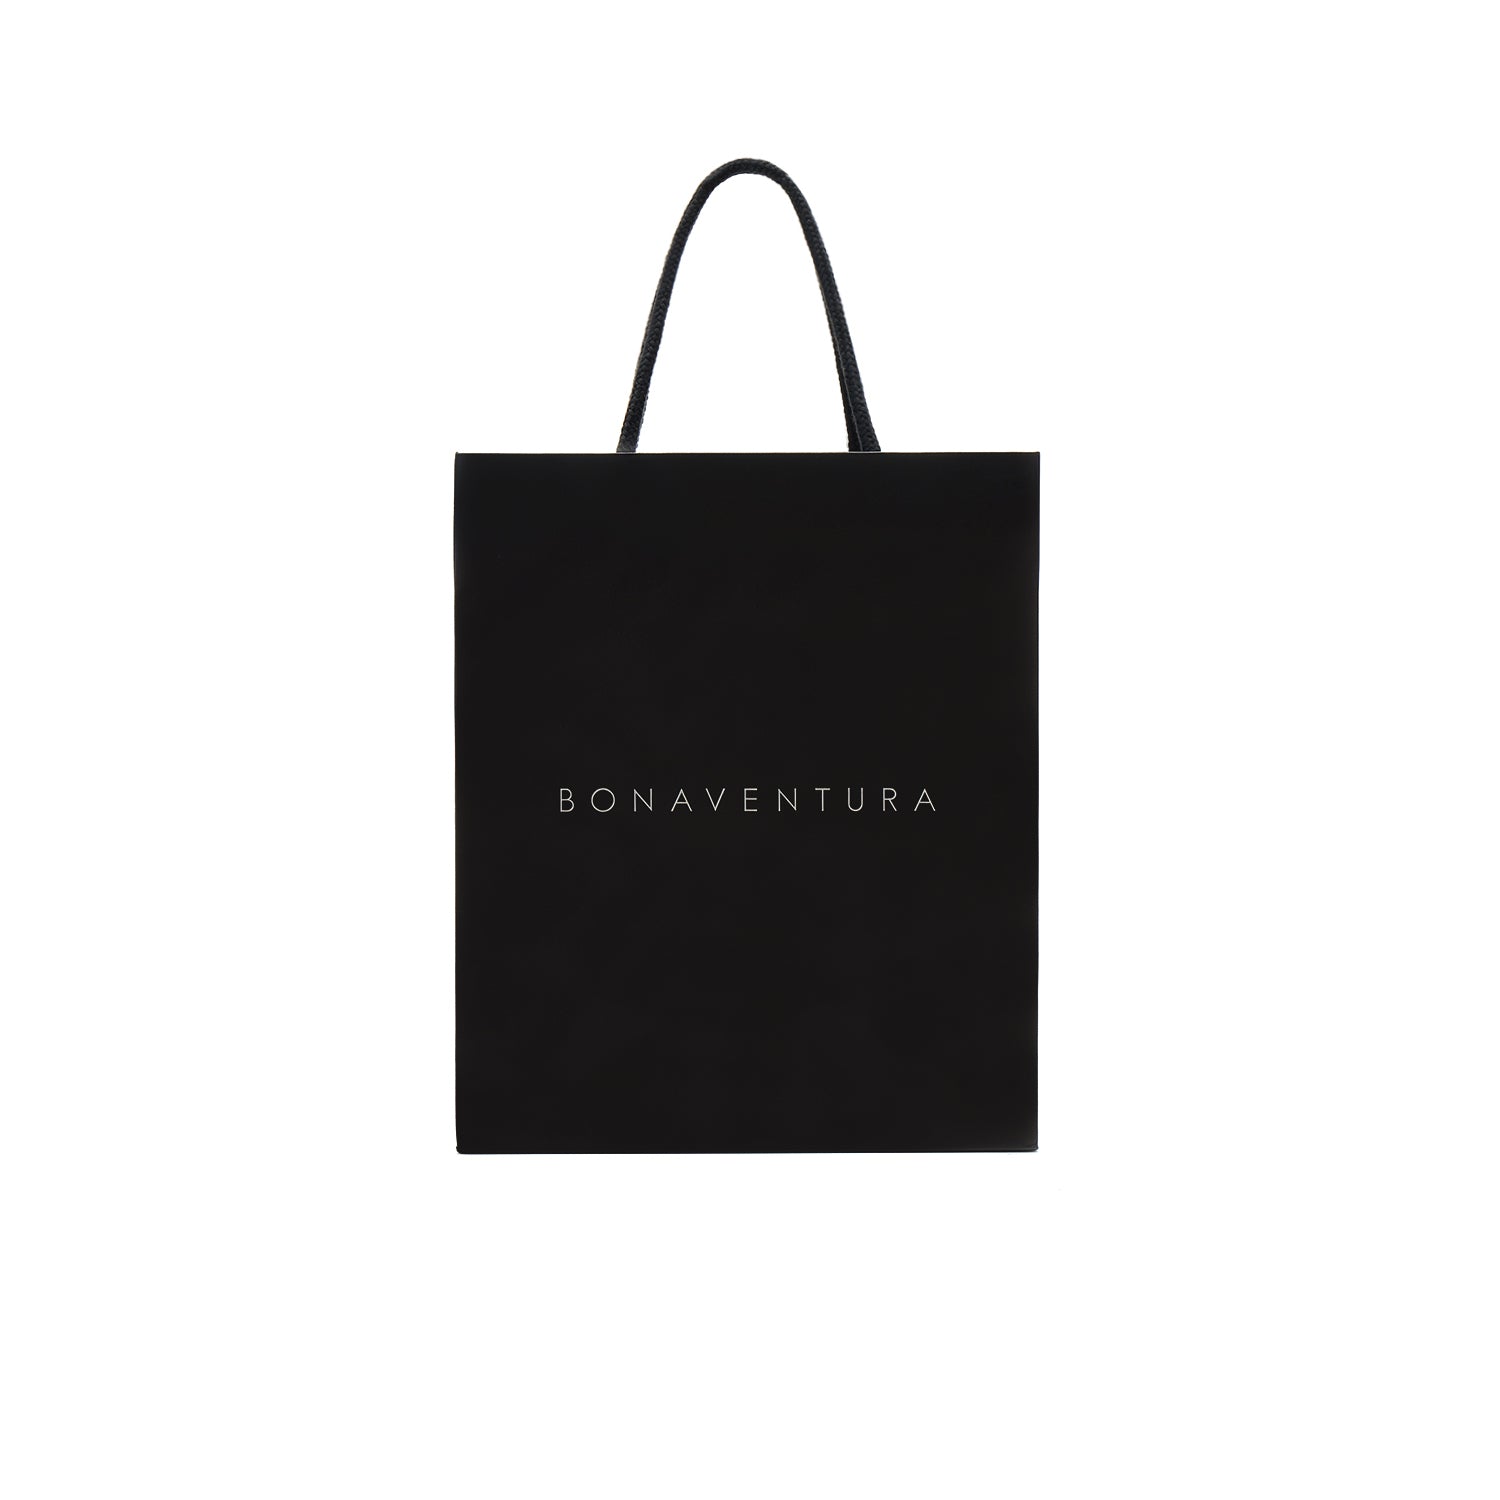 Shopper bag (medium size)